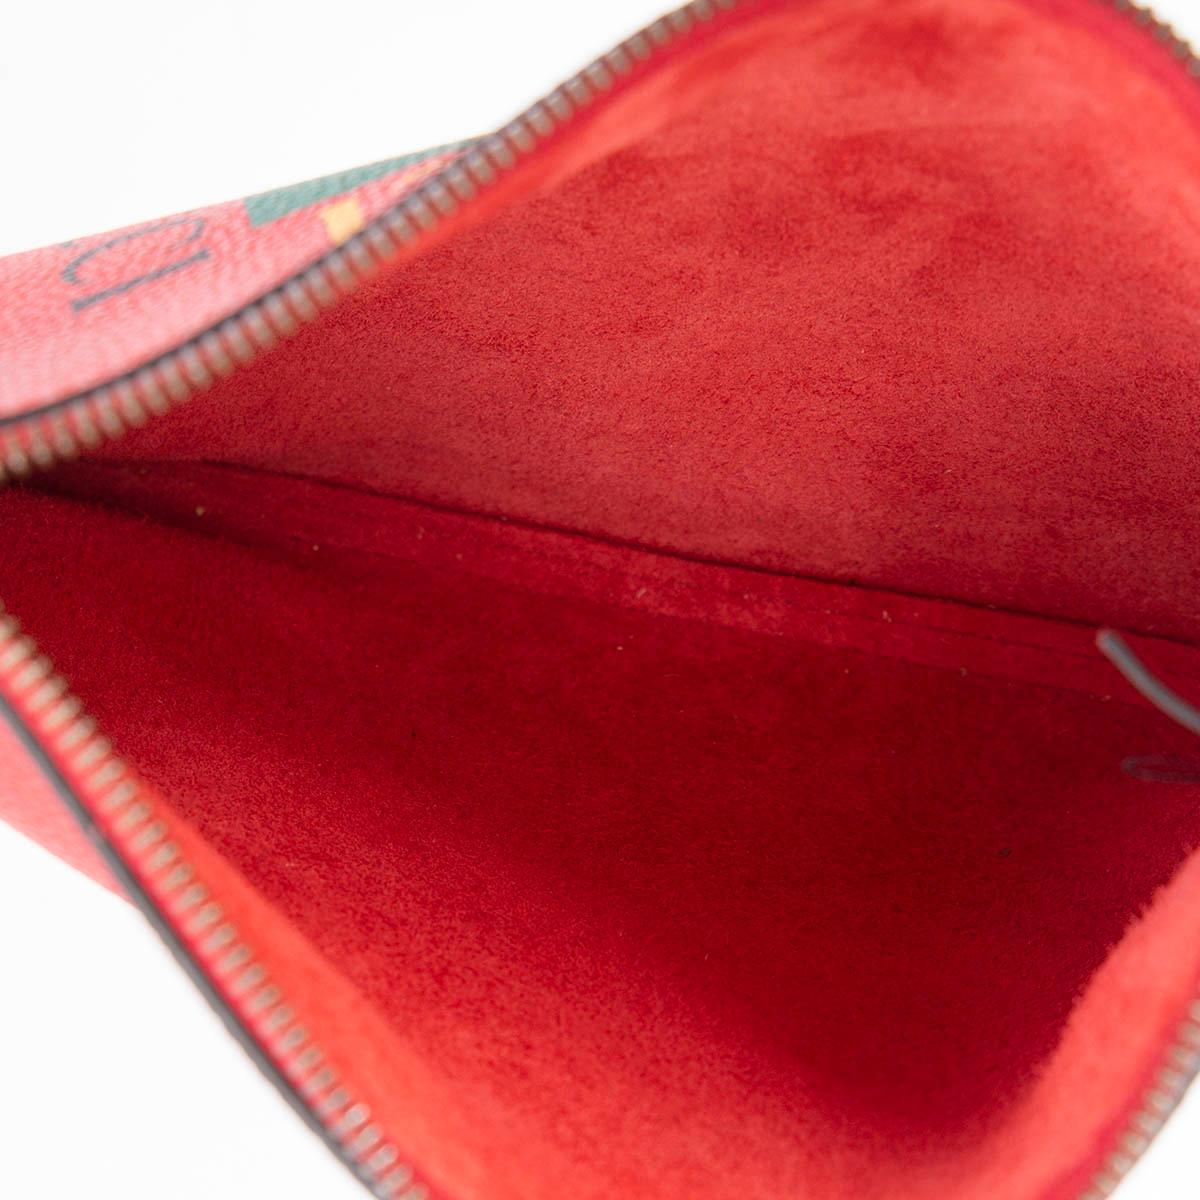 Women's GUCCI red leather 2018 LOGO SMALL PORTFOLIO Pouch Bag